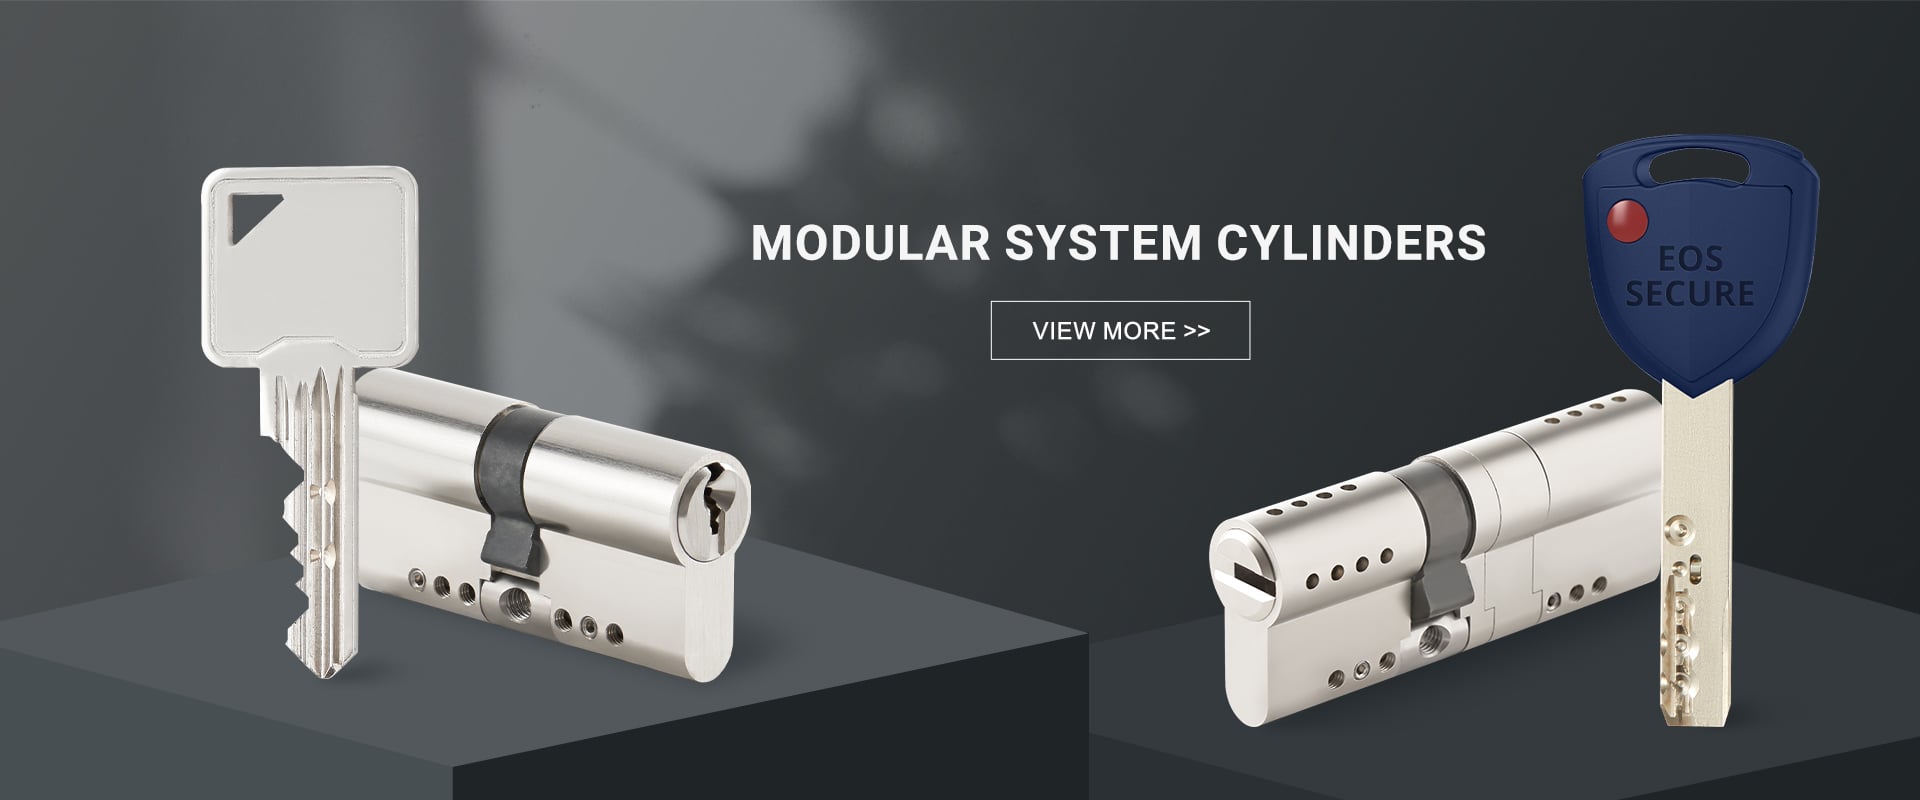 modular system cylinder